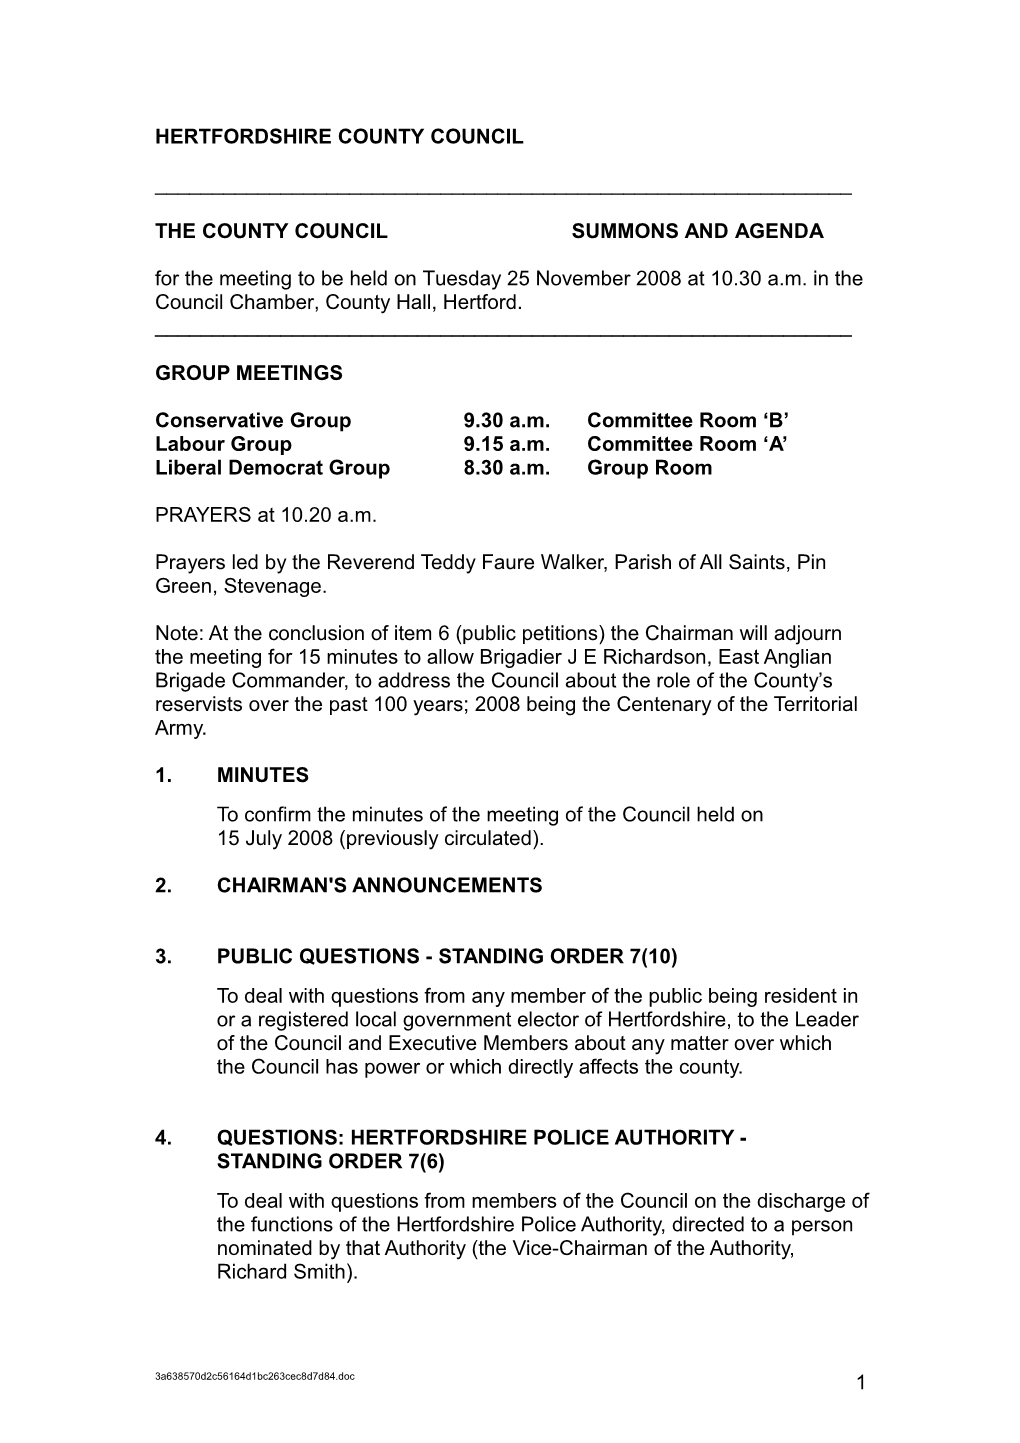 Hertfordshire County Council Agenda - 25 November 2008